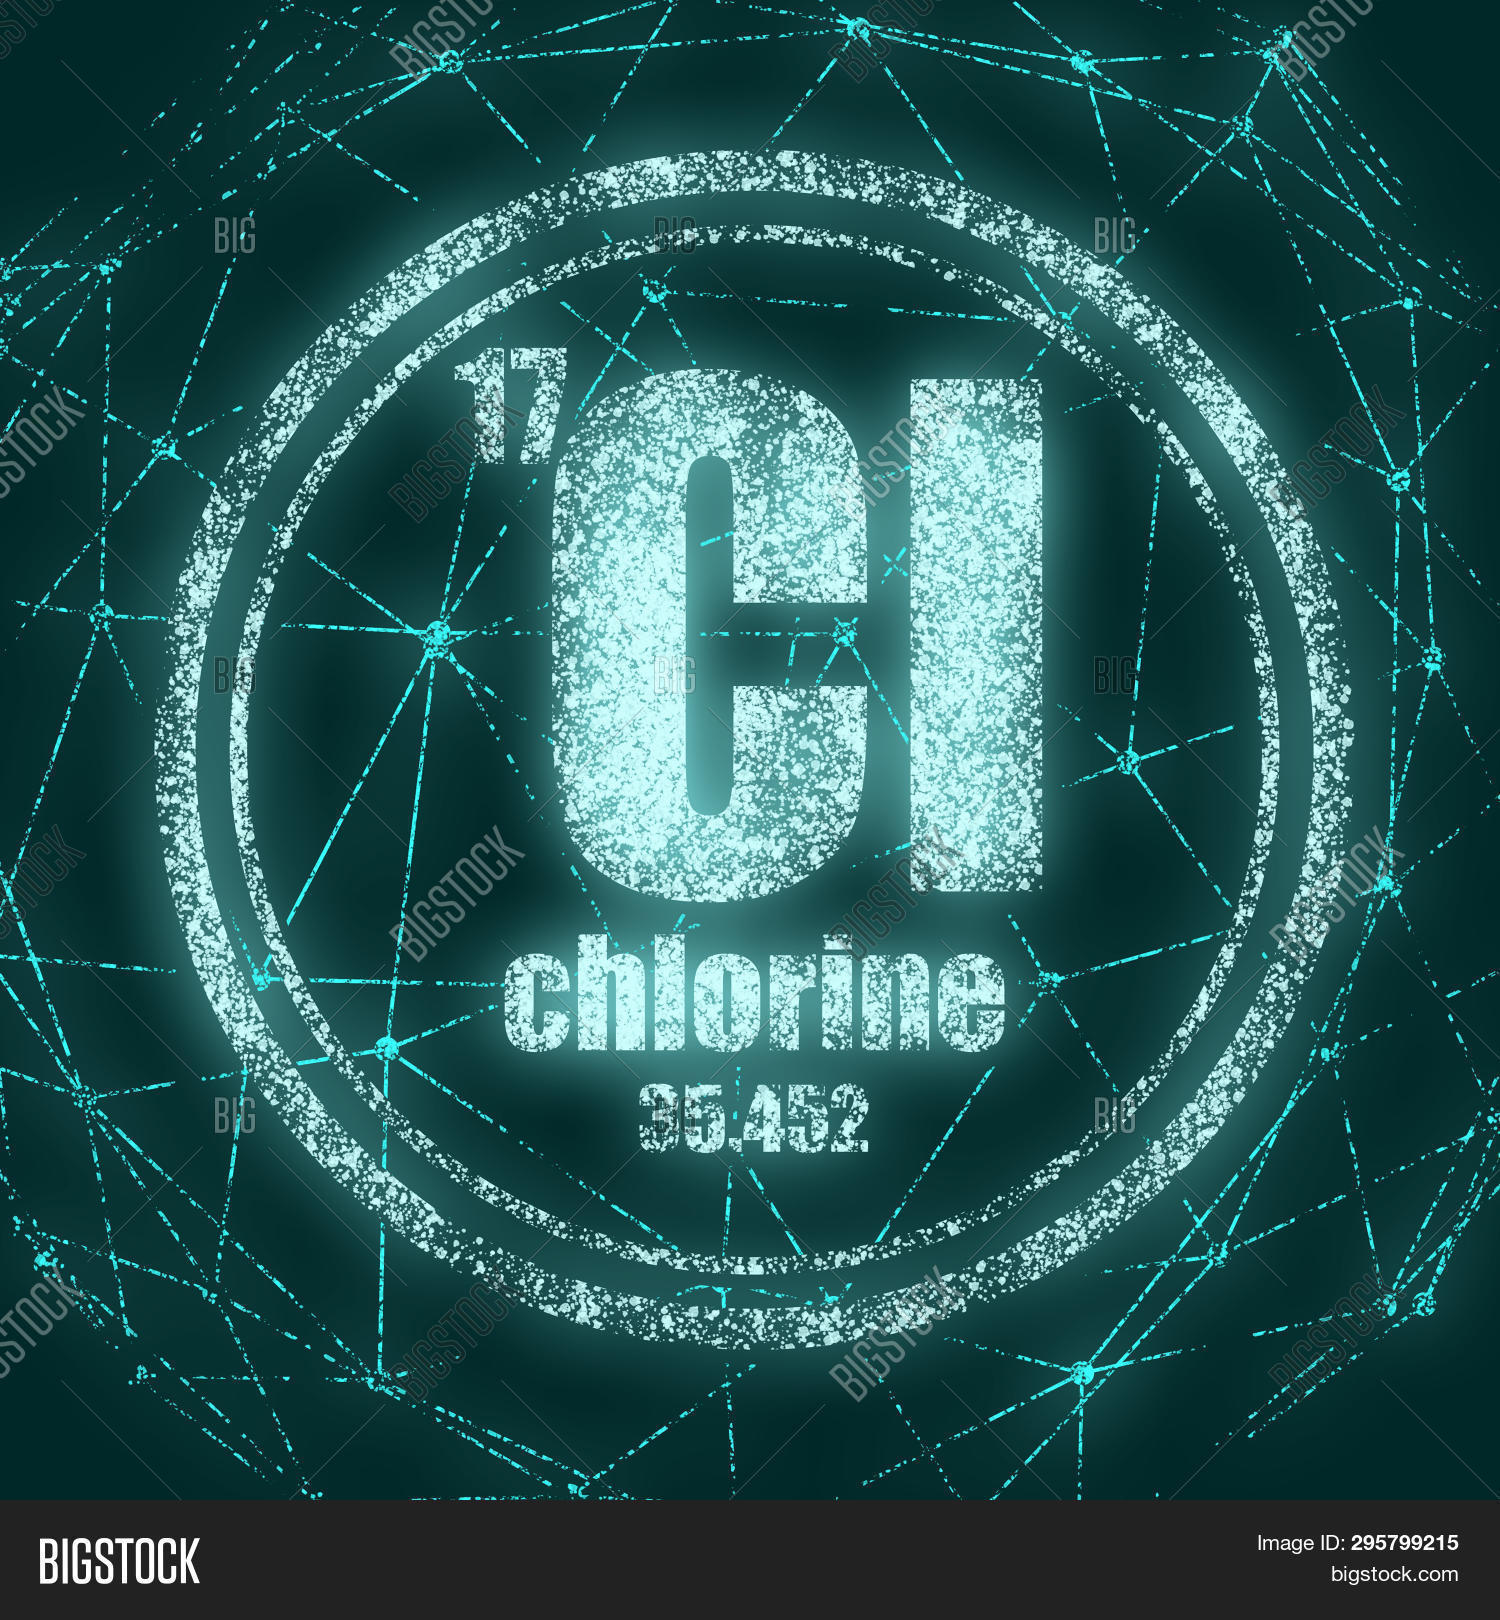 Chlorine Chemical Image Photo Trial Bigstock